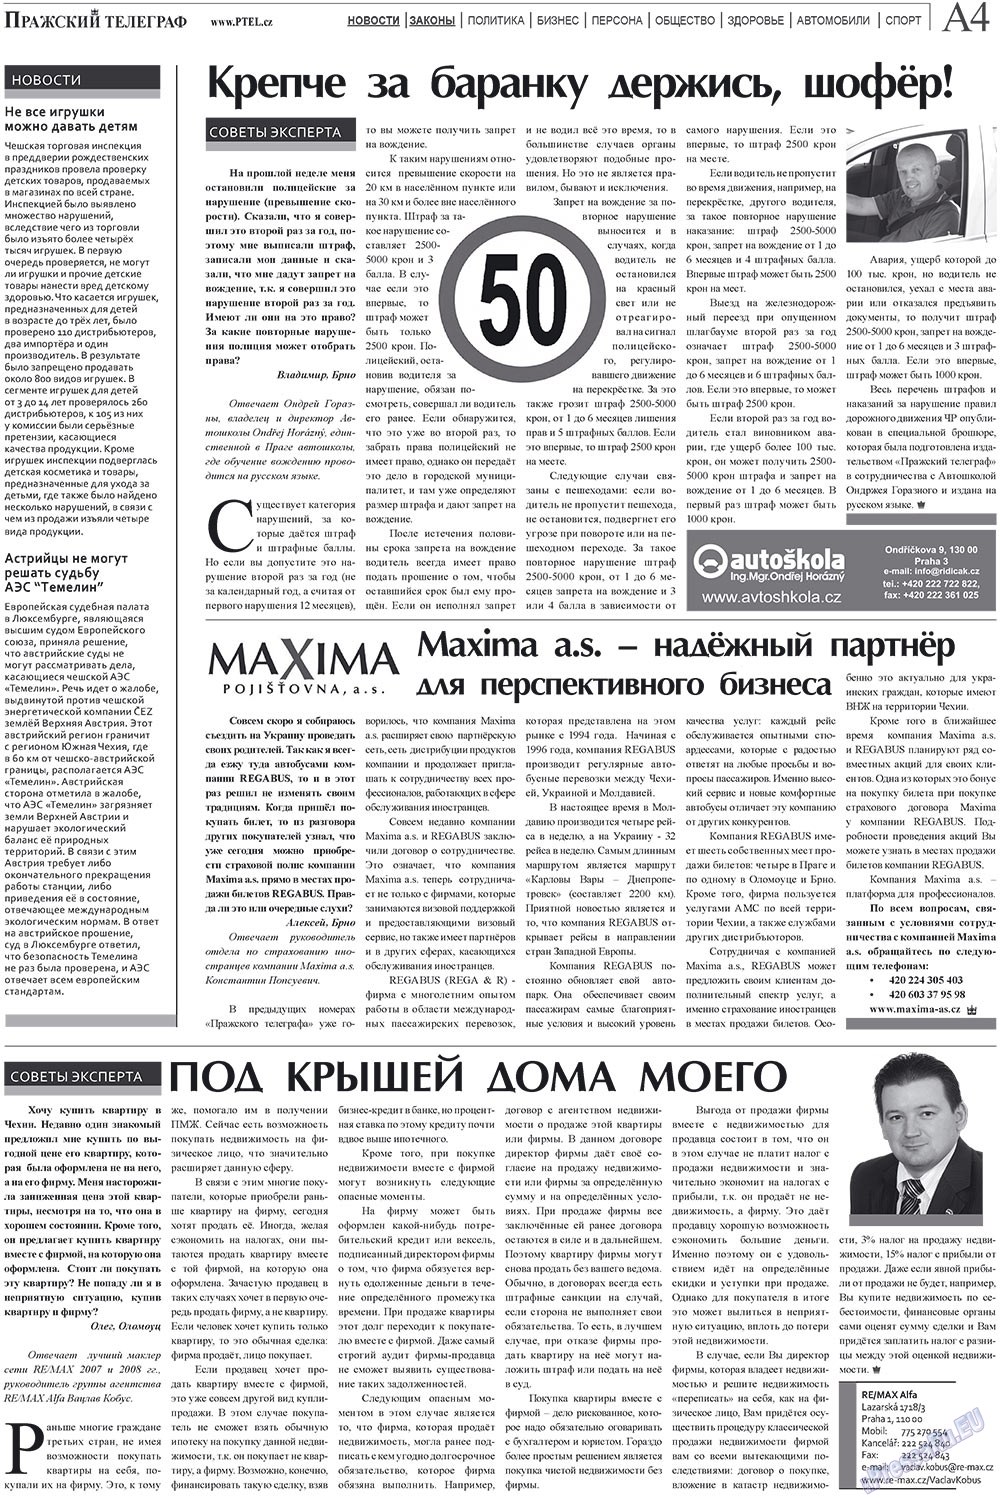 Пражский телеграф, газета. 2009 №28 стр.4